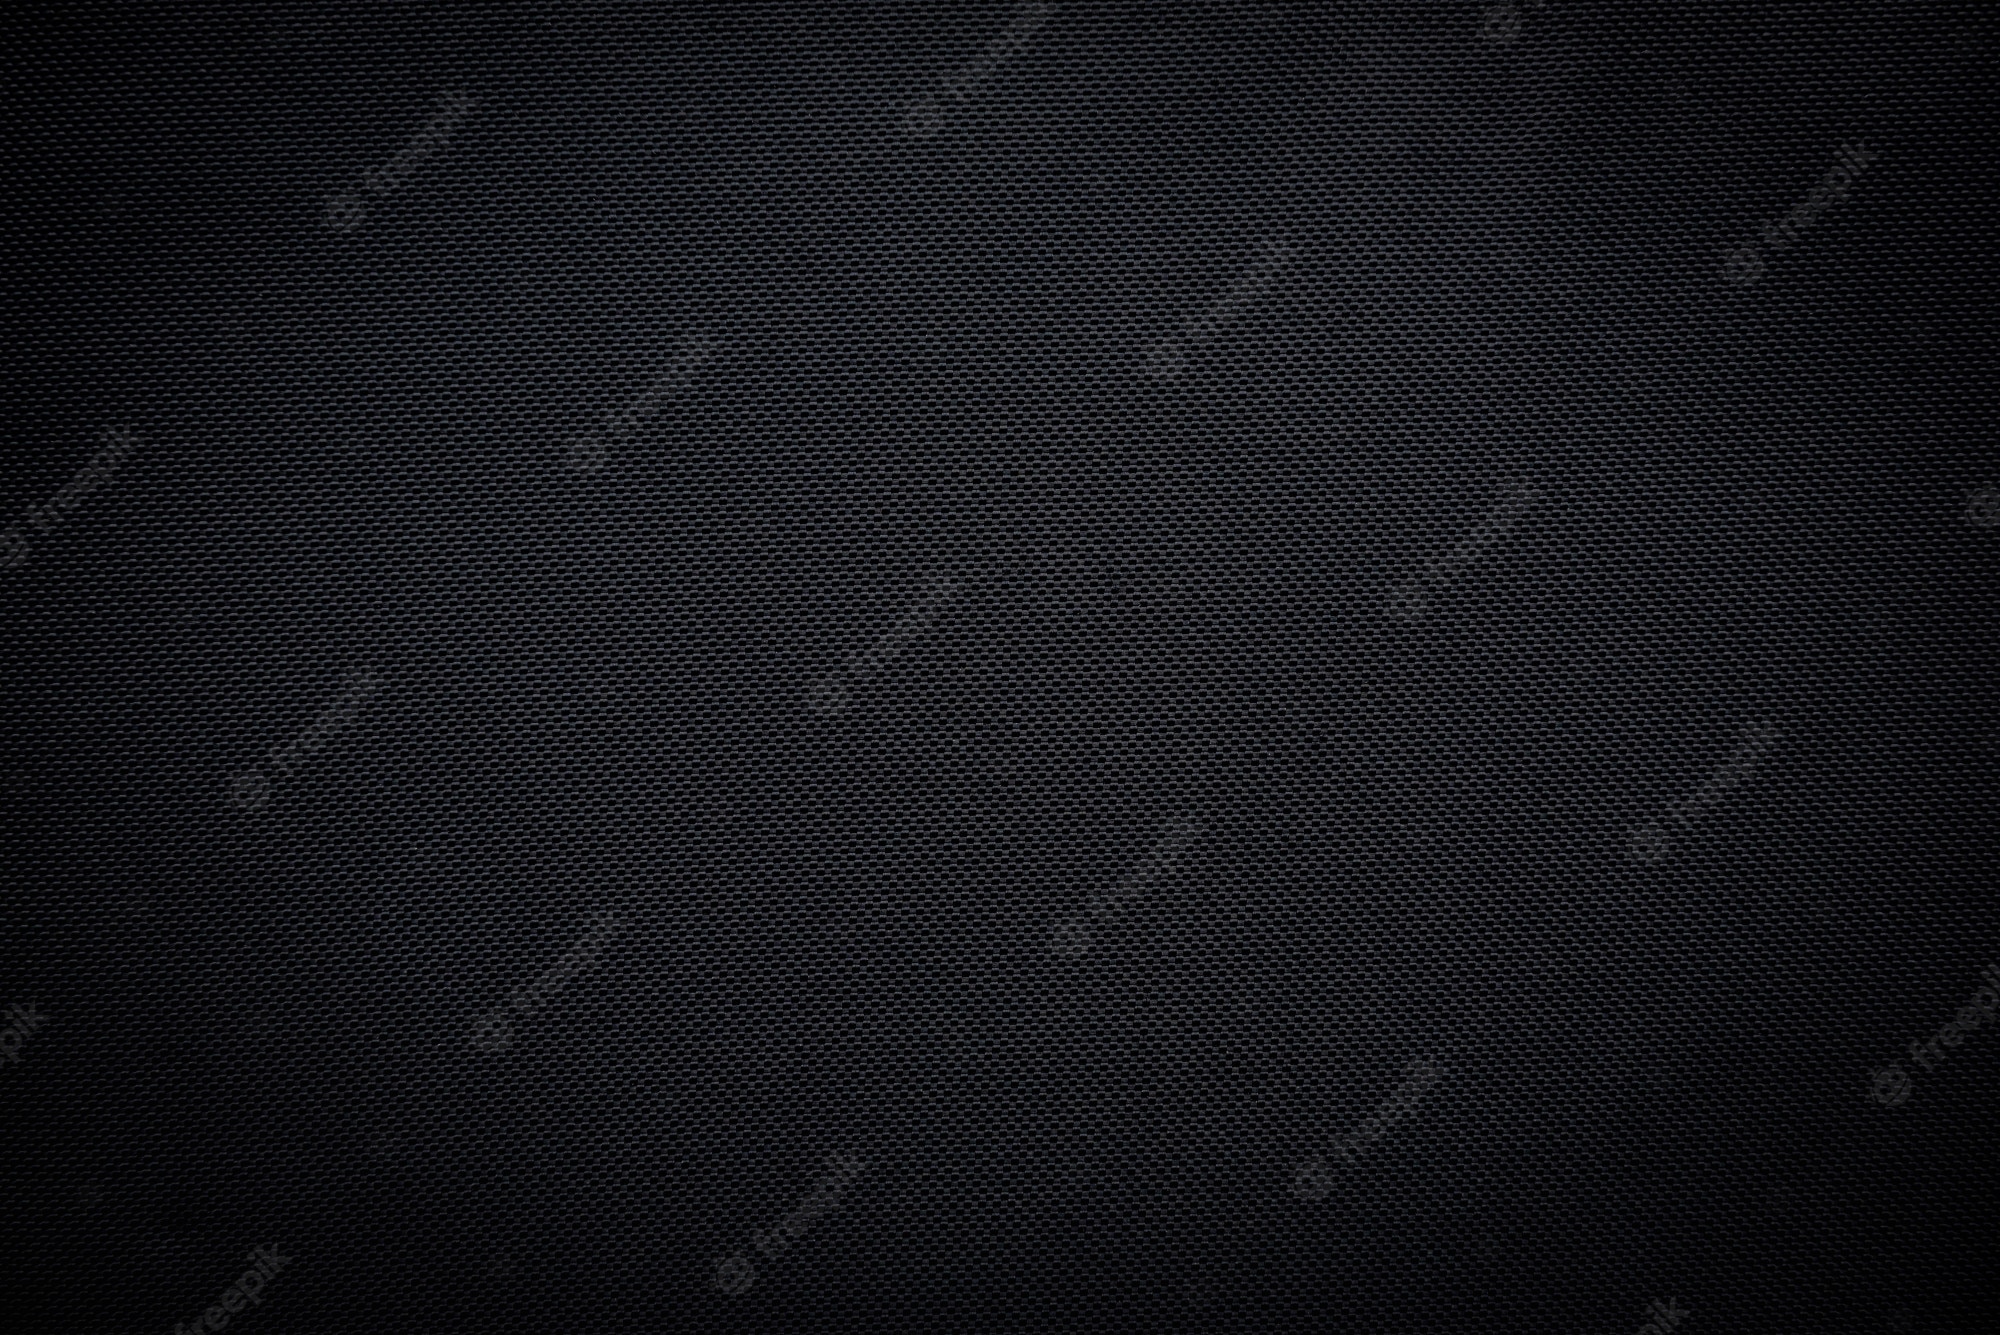 Premium Photo. Black woven carbon fiber sheet texture background